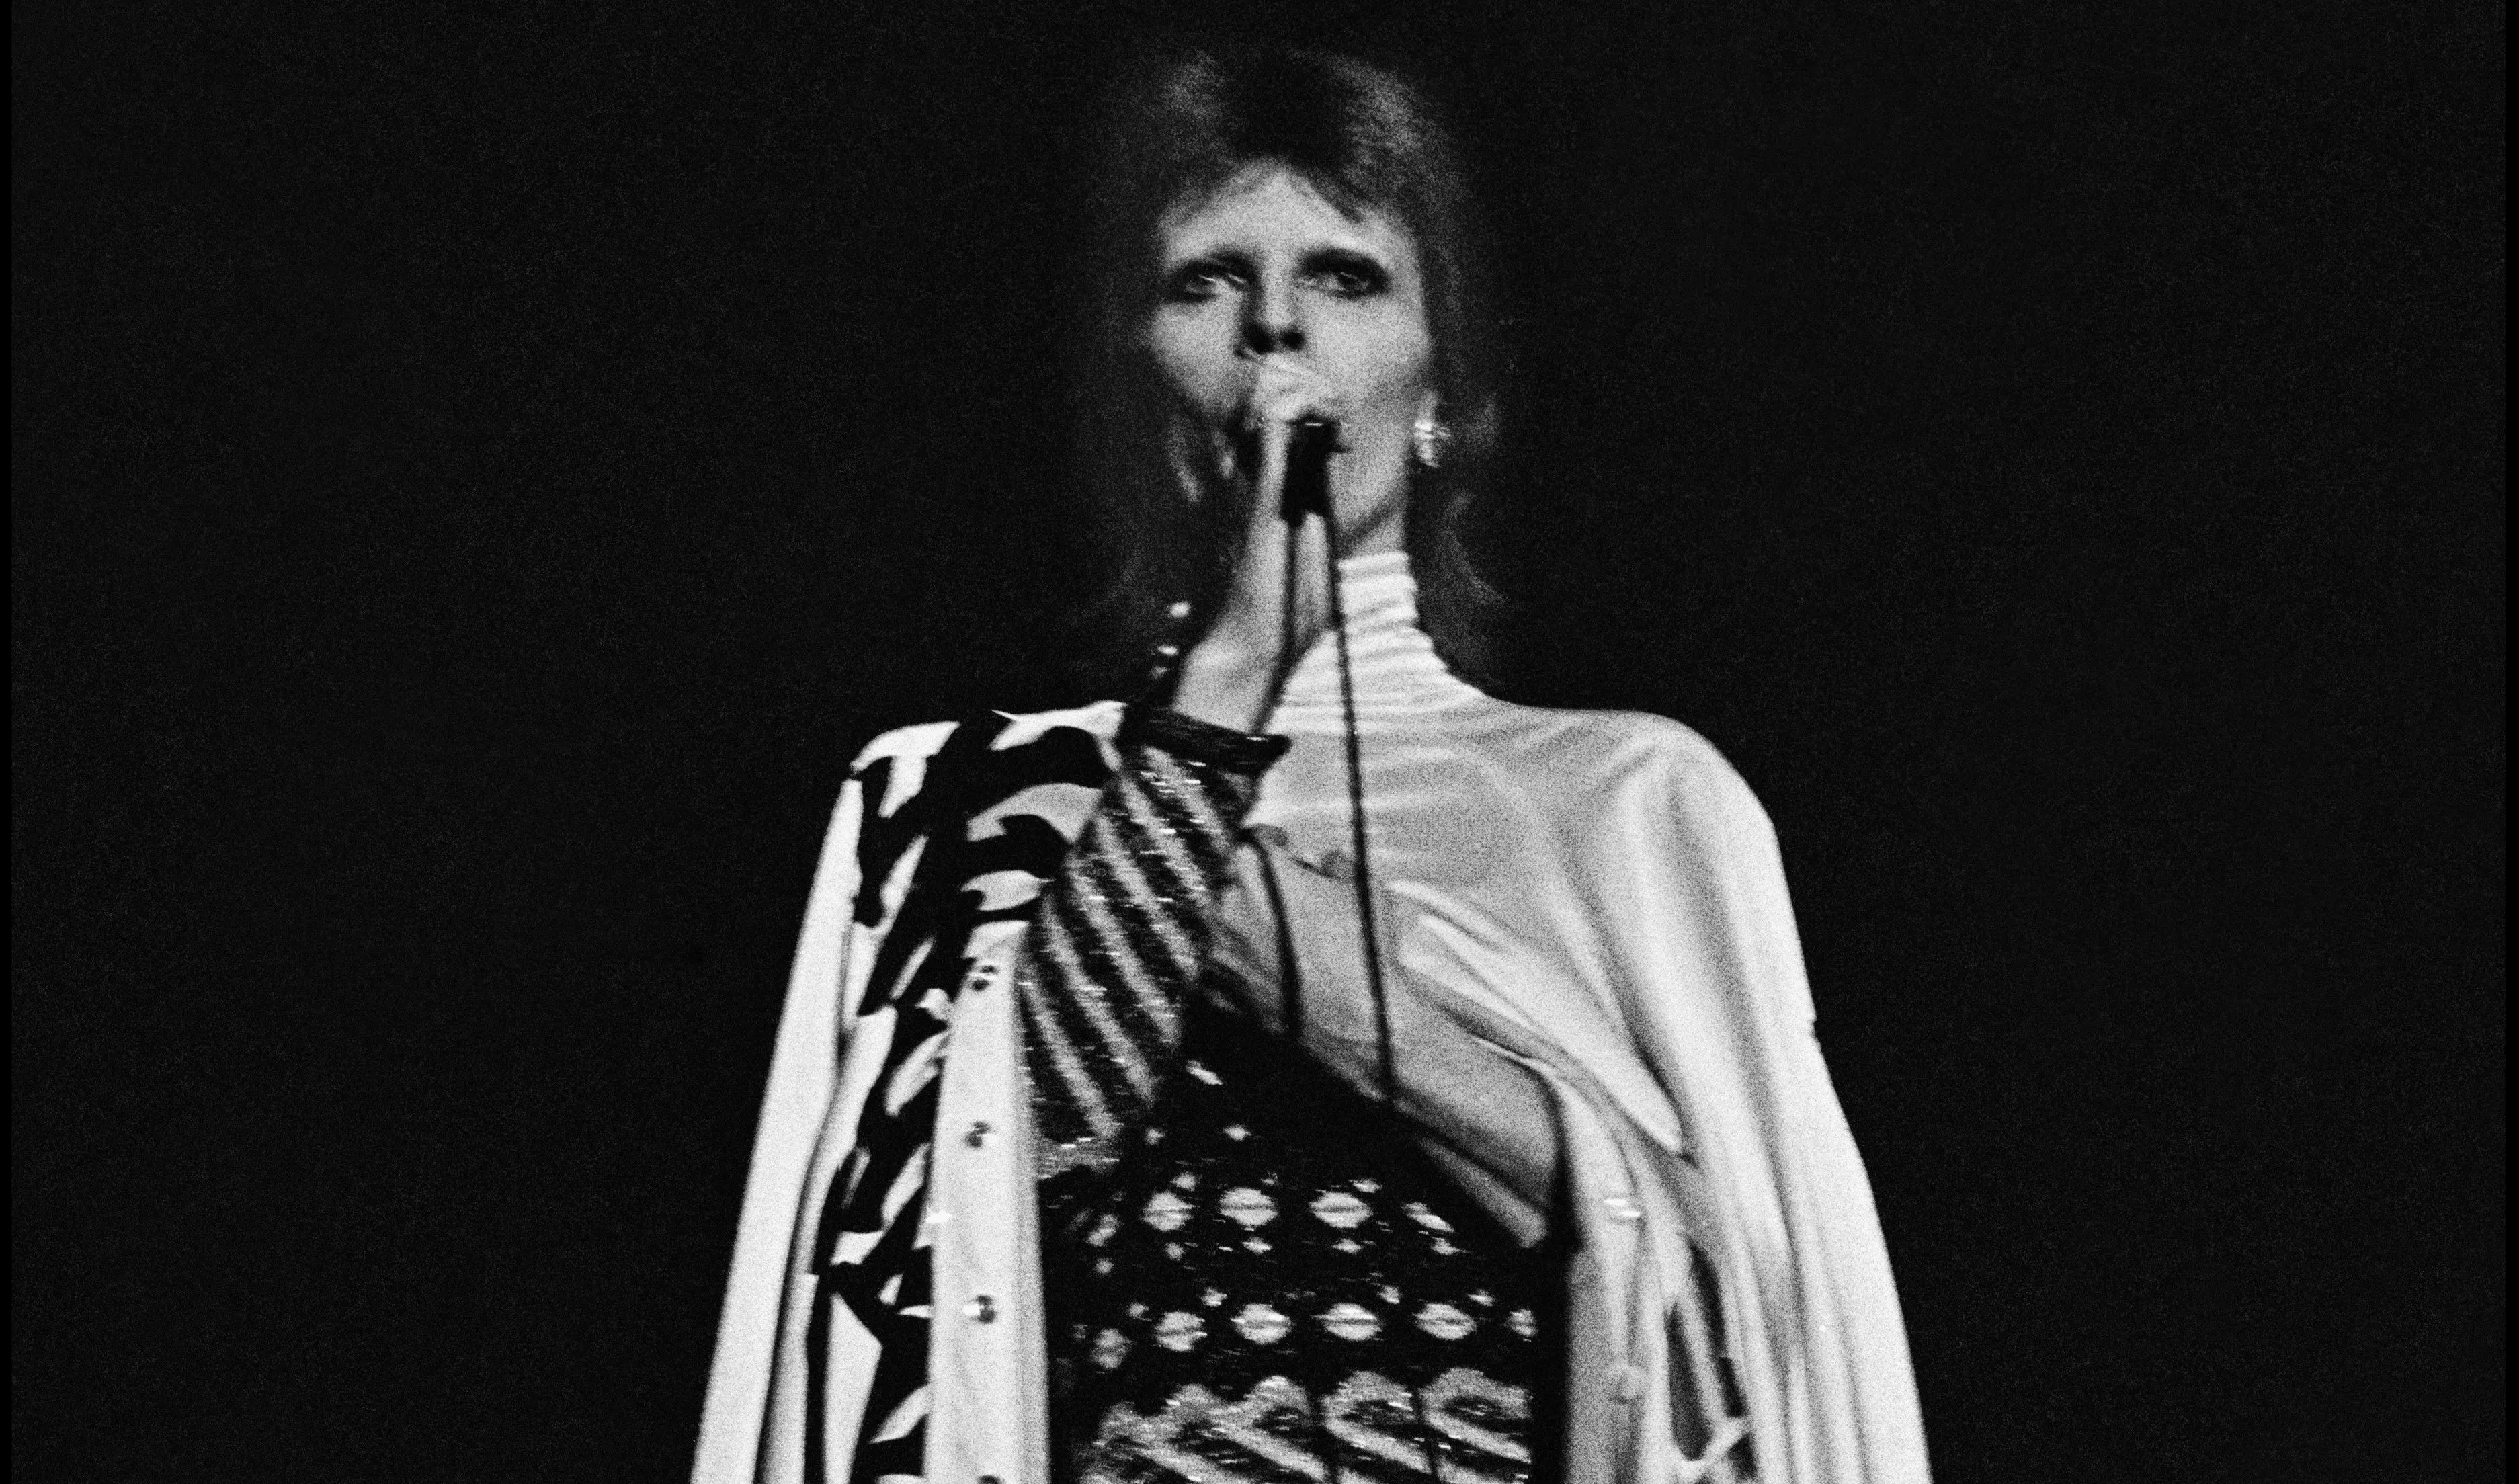 David Bowie på scenen som Ziggy Stardust i 1973. Pressefoto / Warner Music